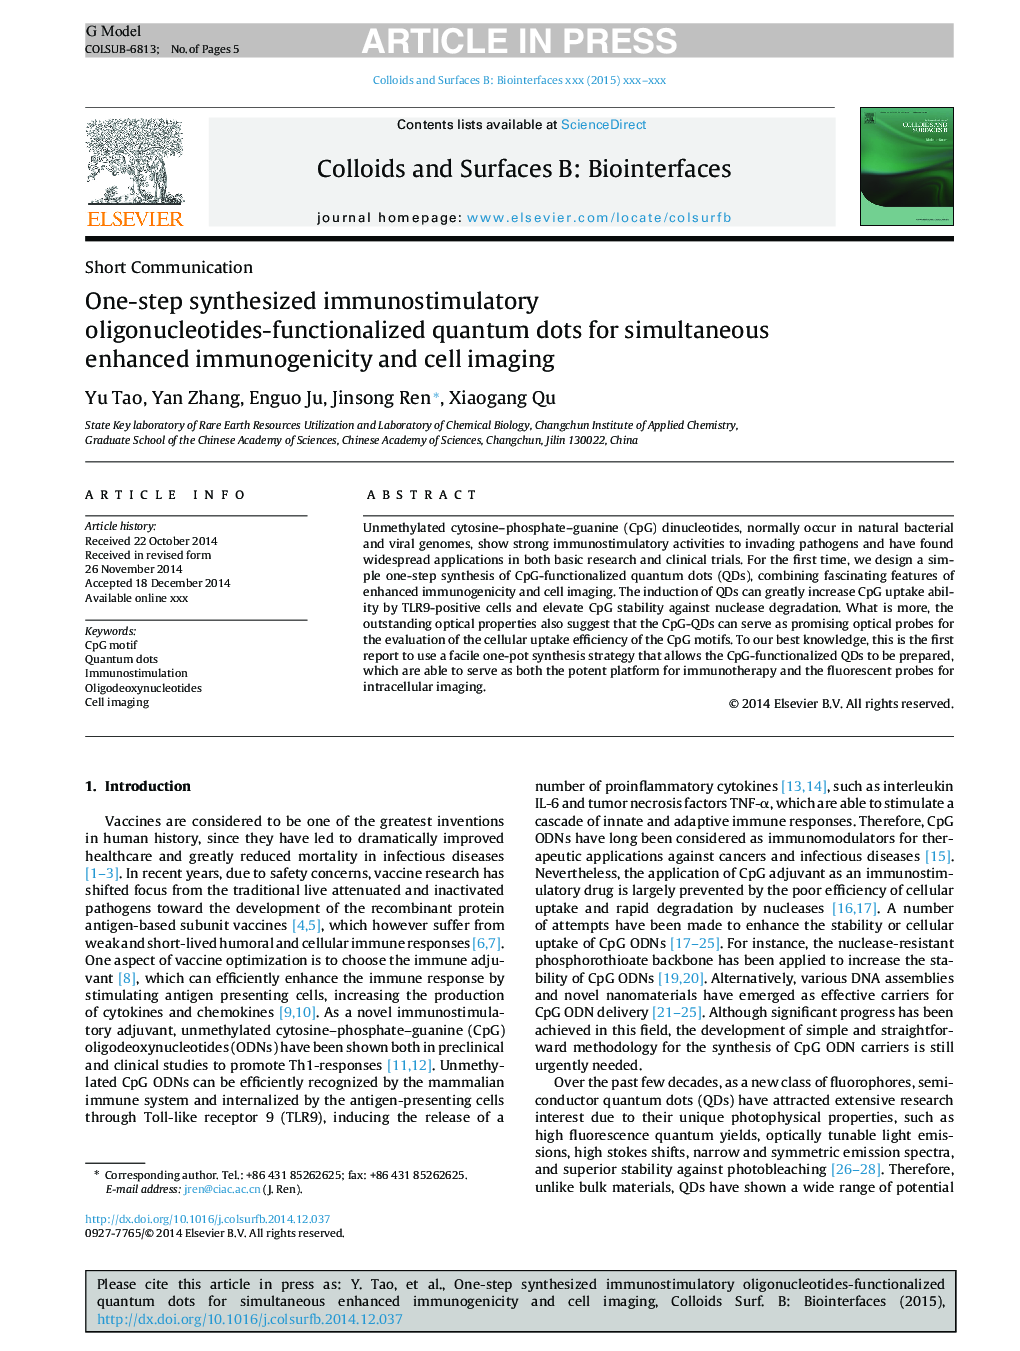 One-step synthesized immunostimulatory oligonucleotides-functionalized quantum dots for simultaneous enhanced immunogenicity and cell imaging